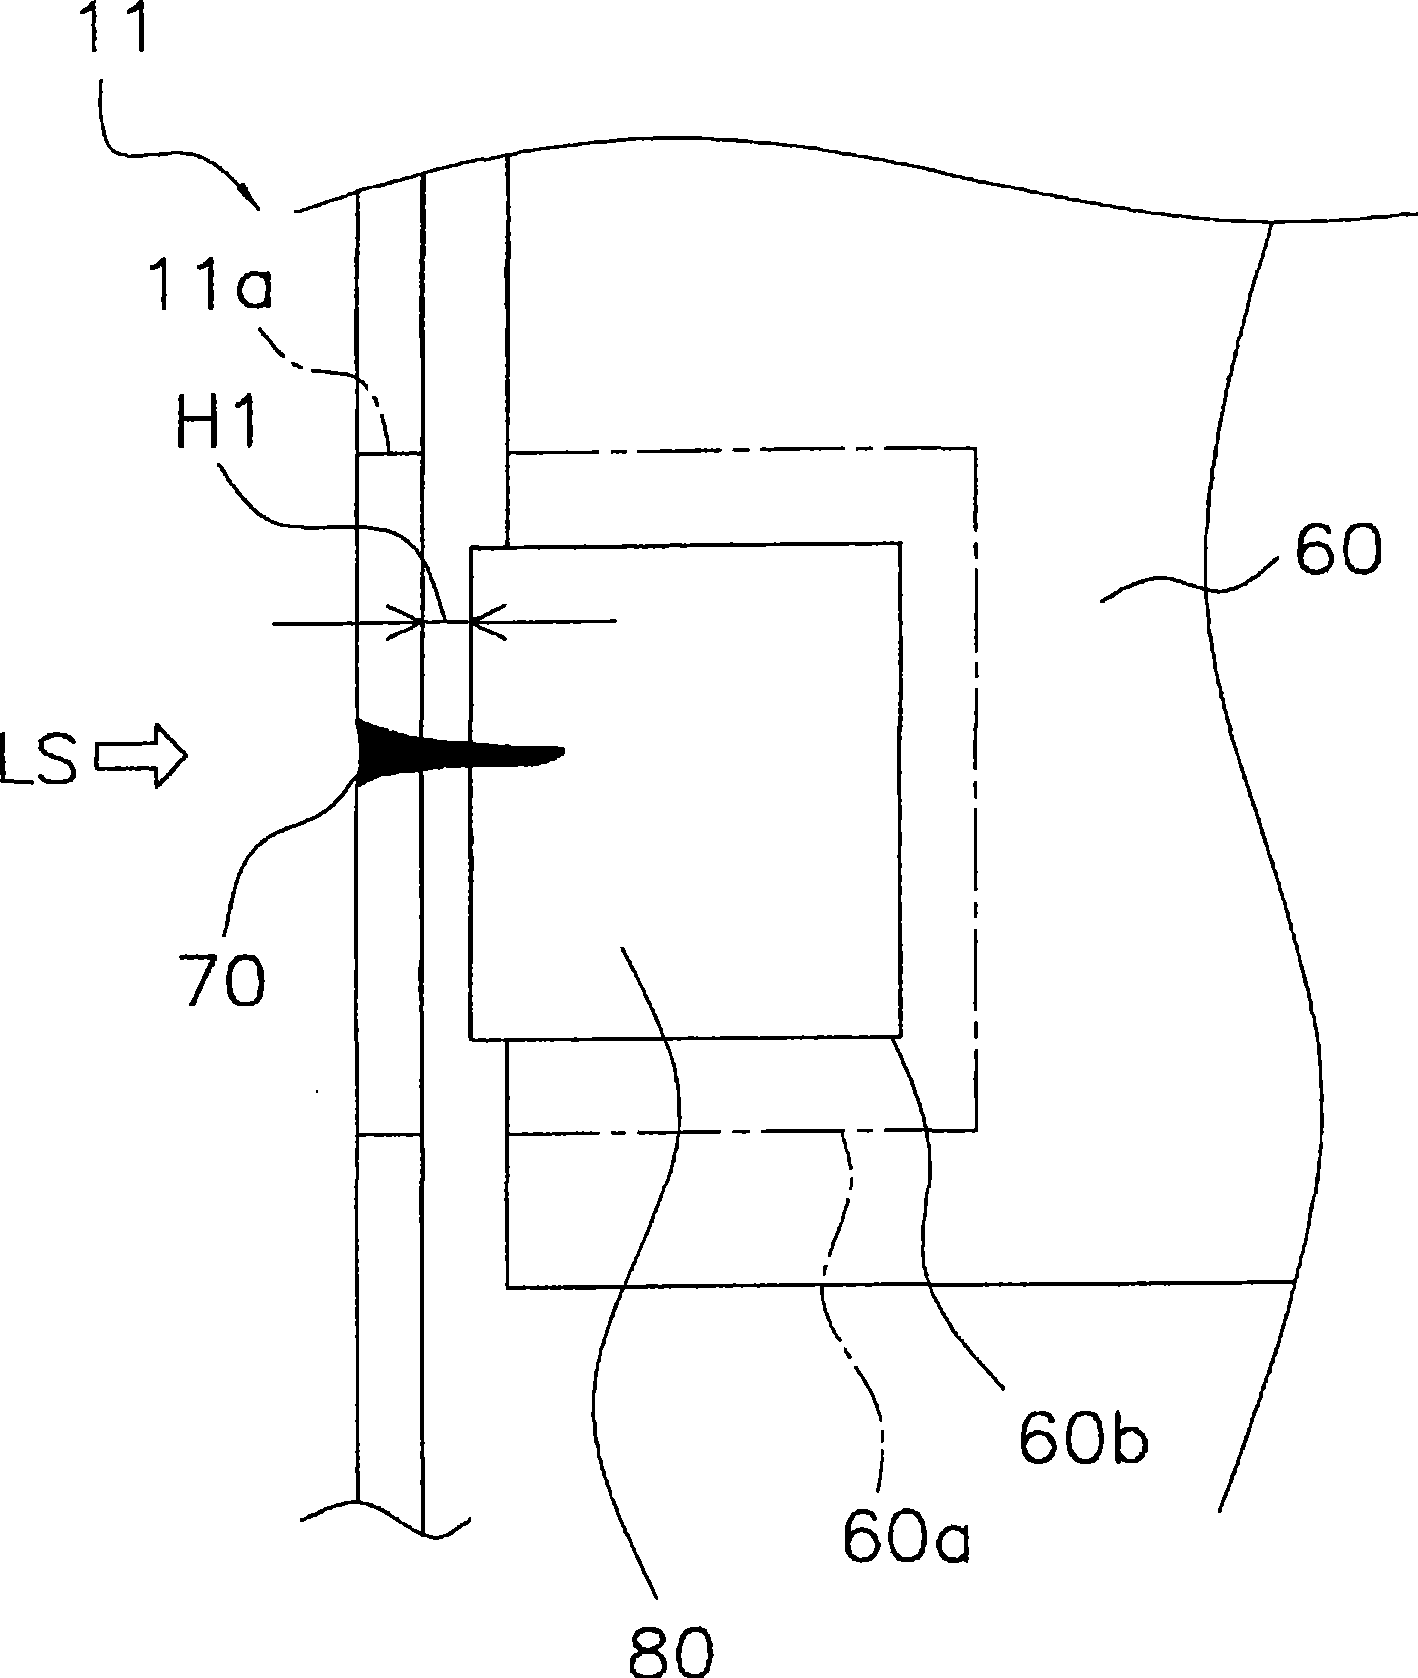 Method for producing compressor, and compressor